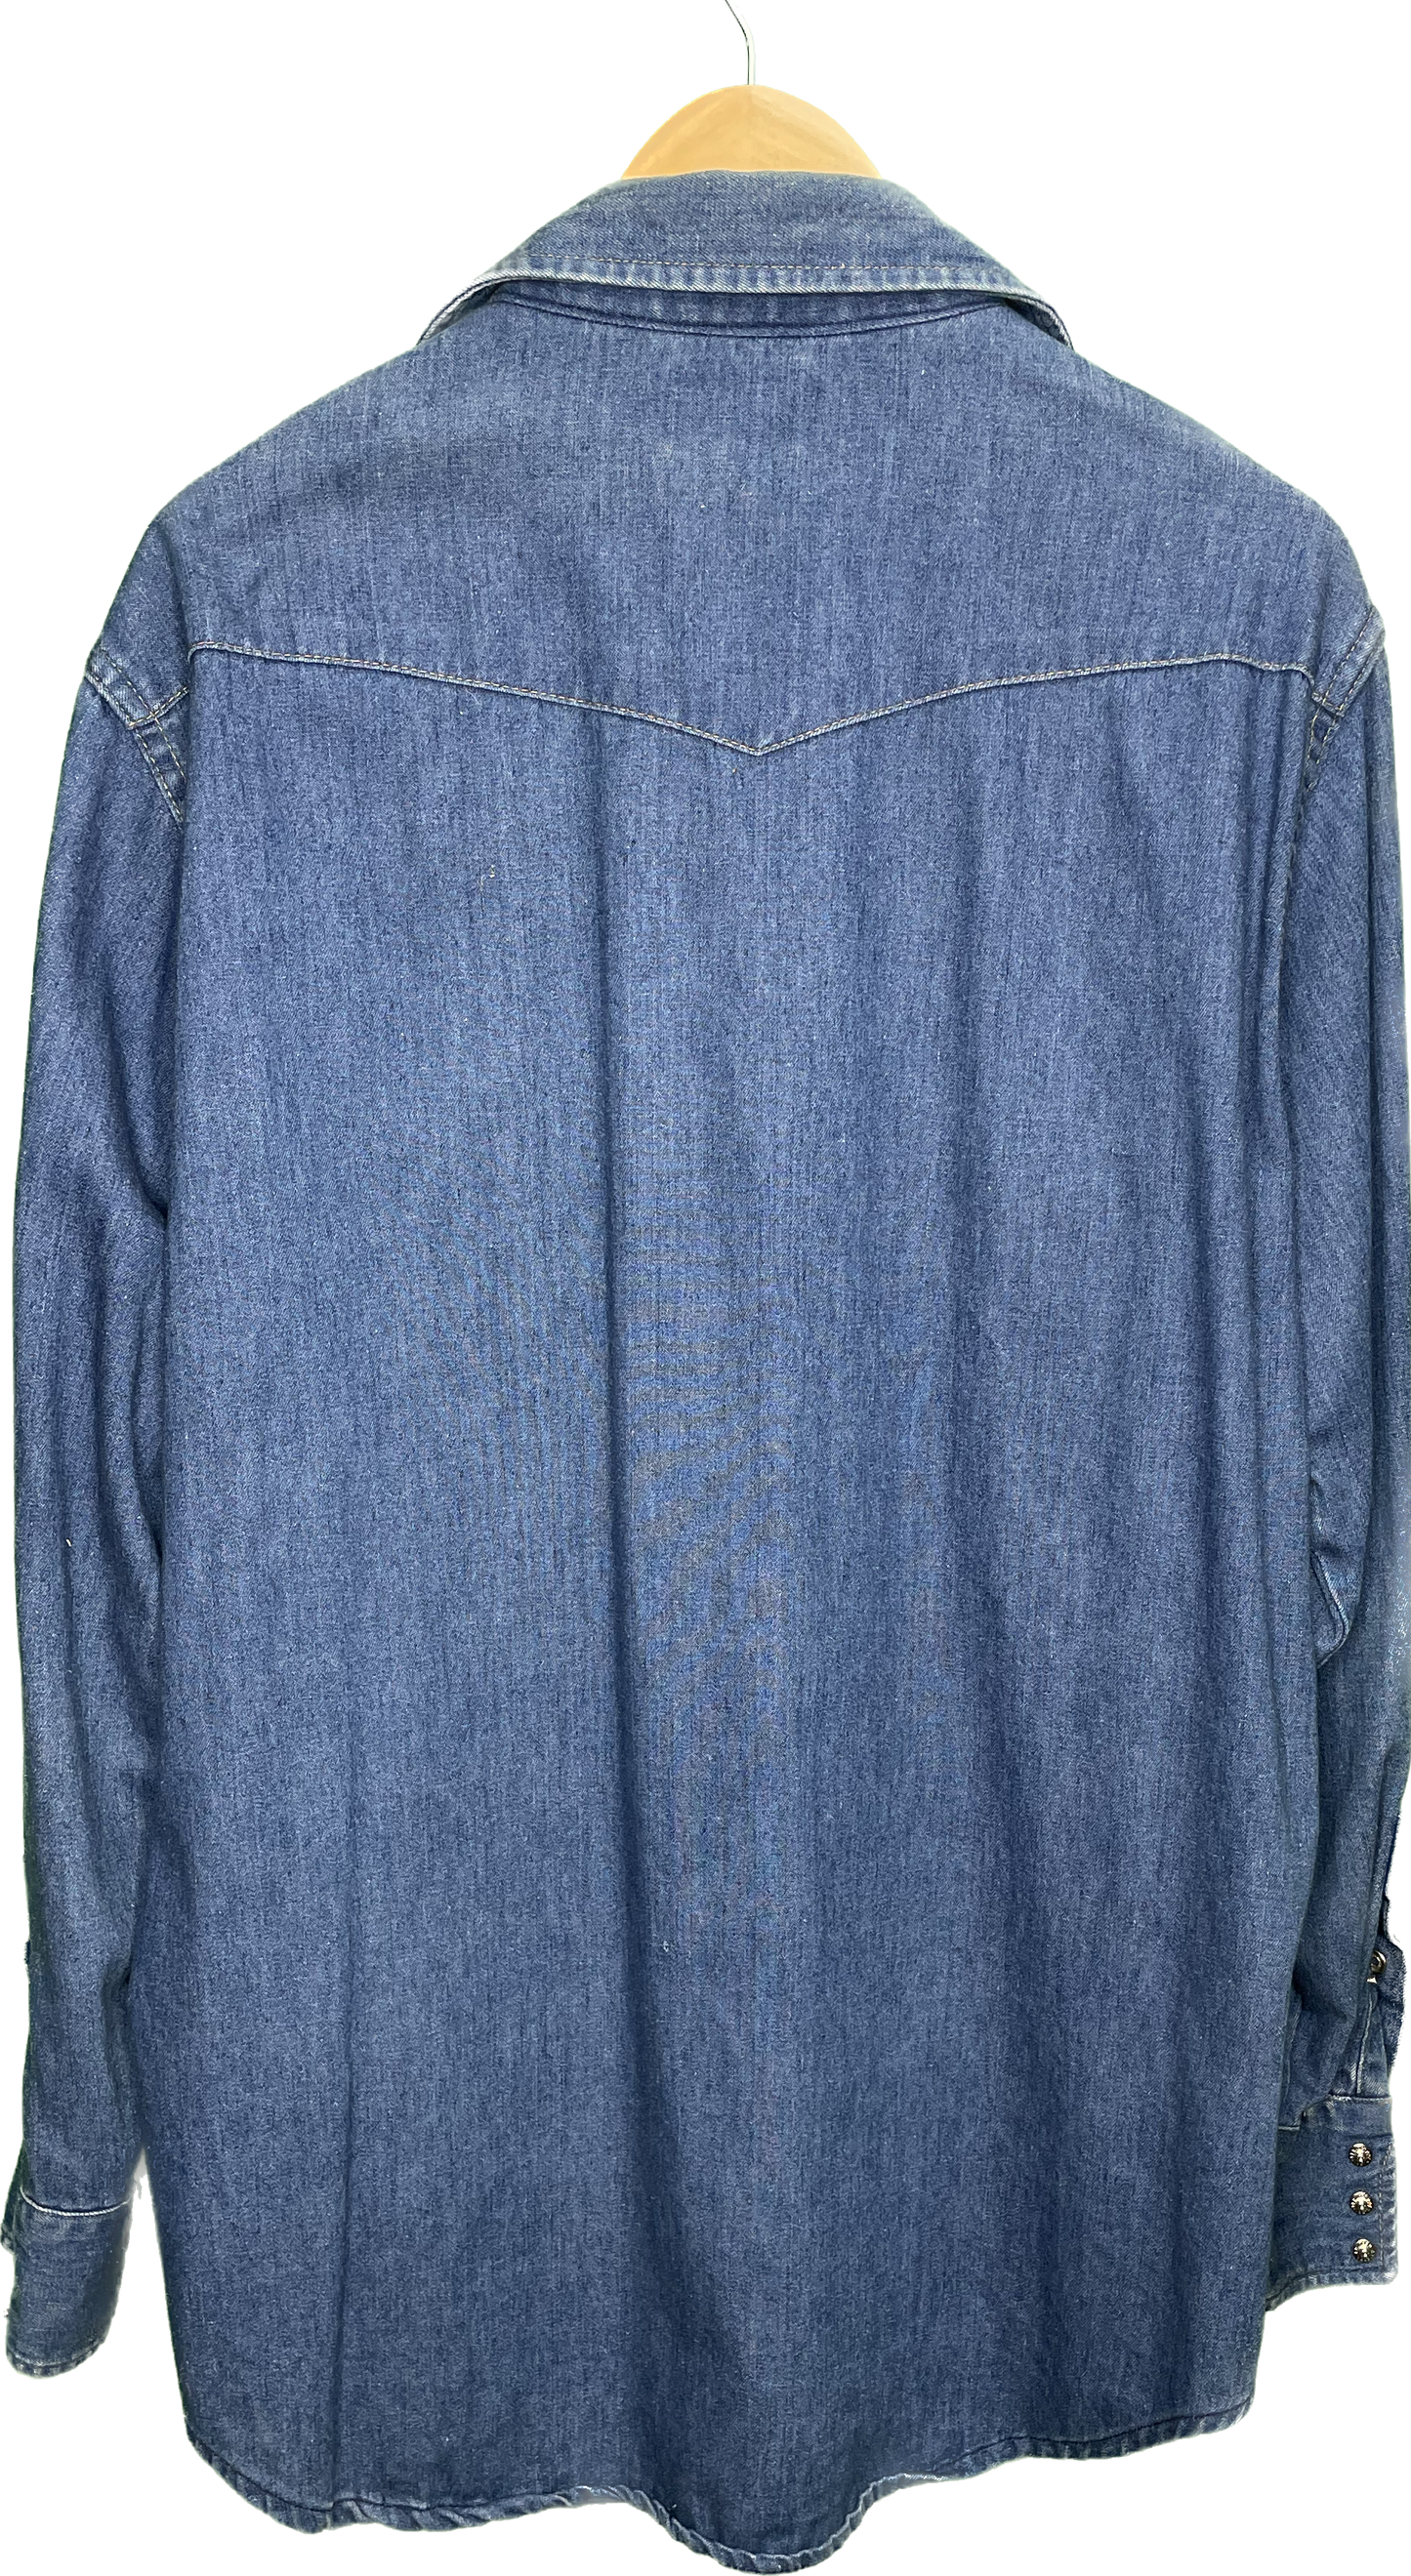 Vintage XXL Distressed Blue Jean Pearl Snap Work Wear Western Shirt